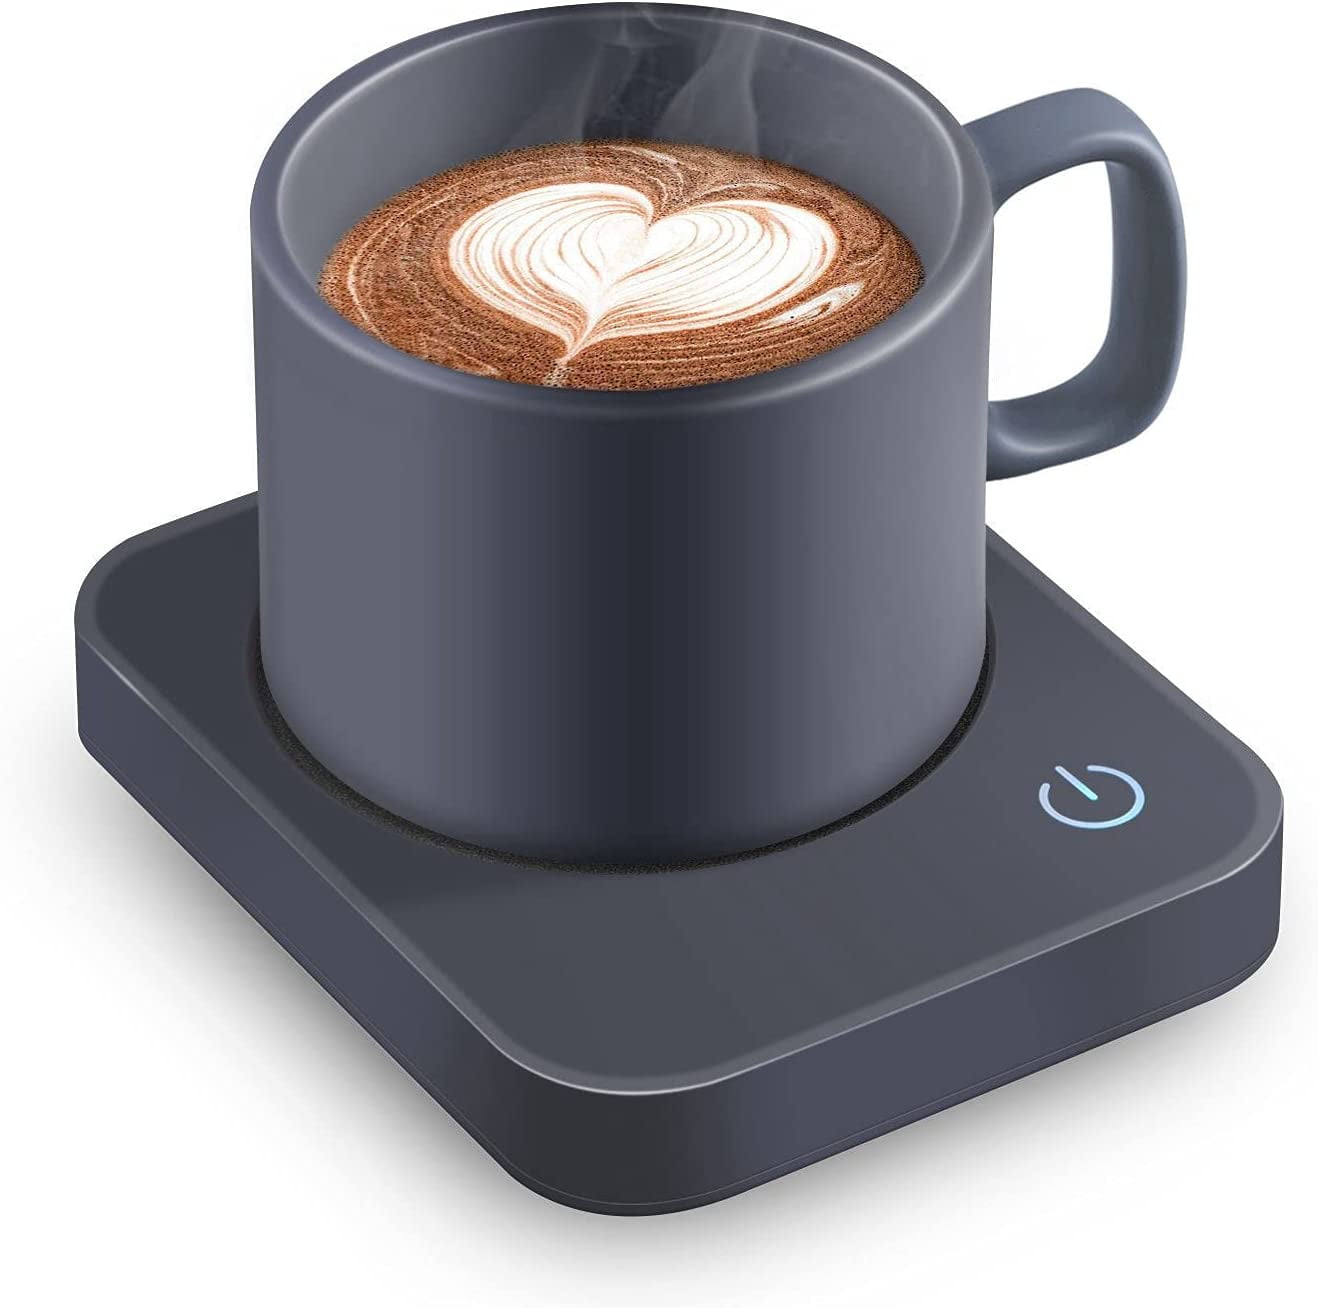 Water Auto Shut Off,Black Coffee Heater Cocoa and Milk Desktop Electric Beverage Mug Cup Warmer Coaster for Heating Tea 